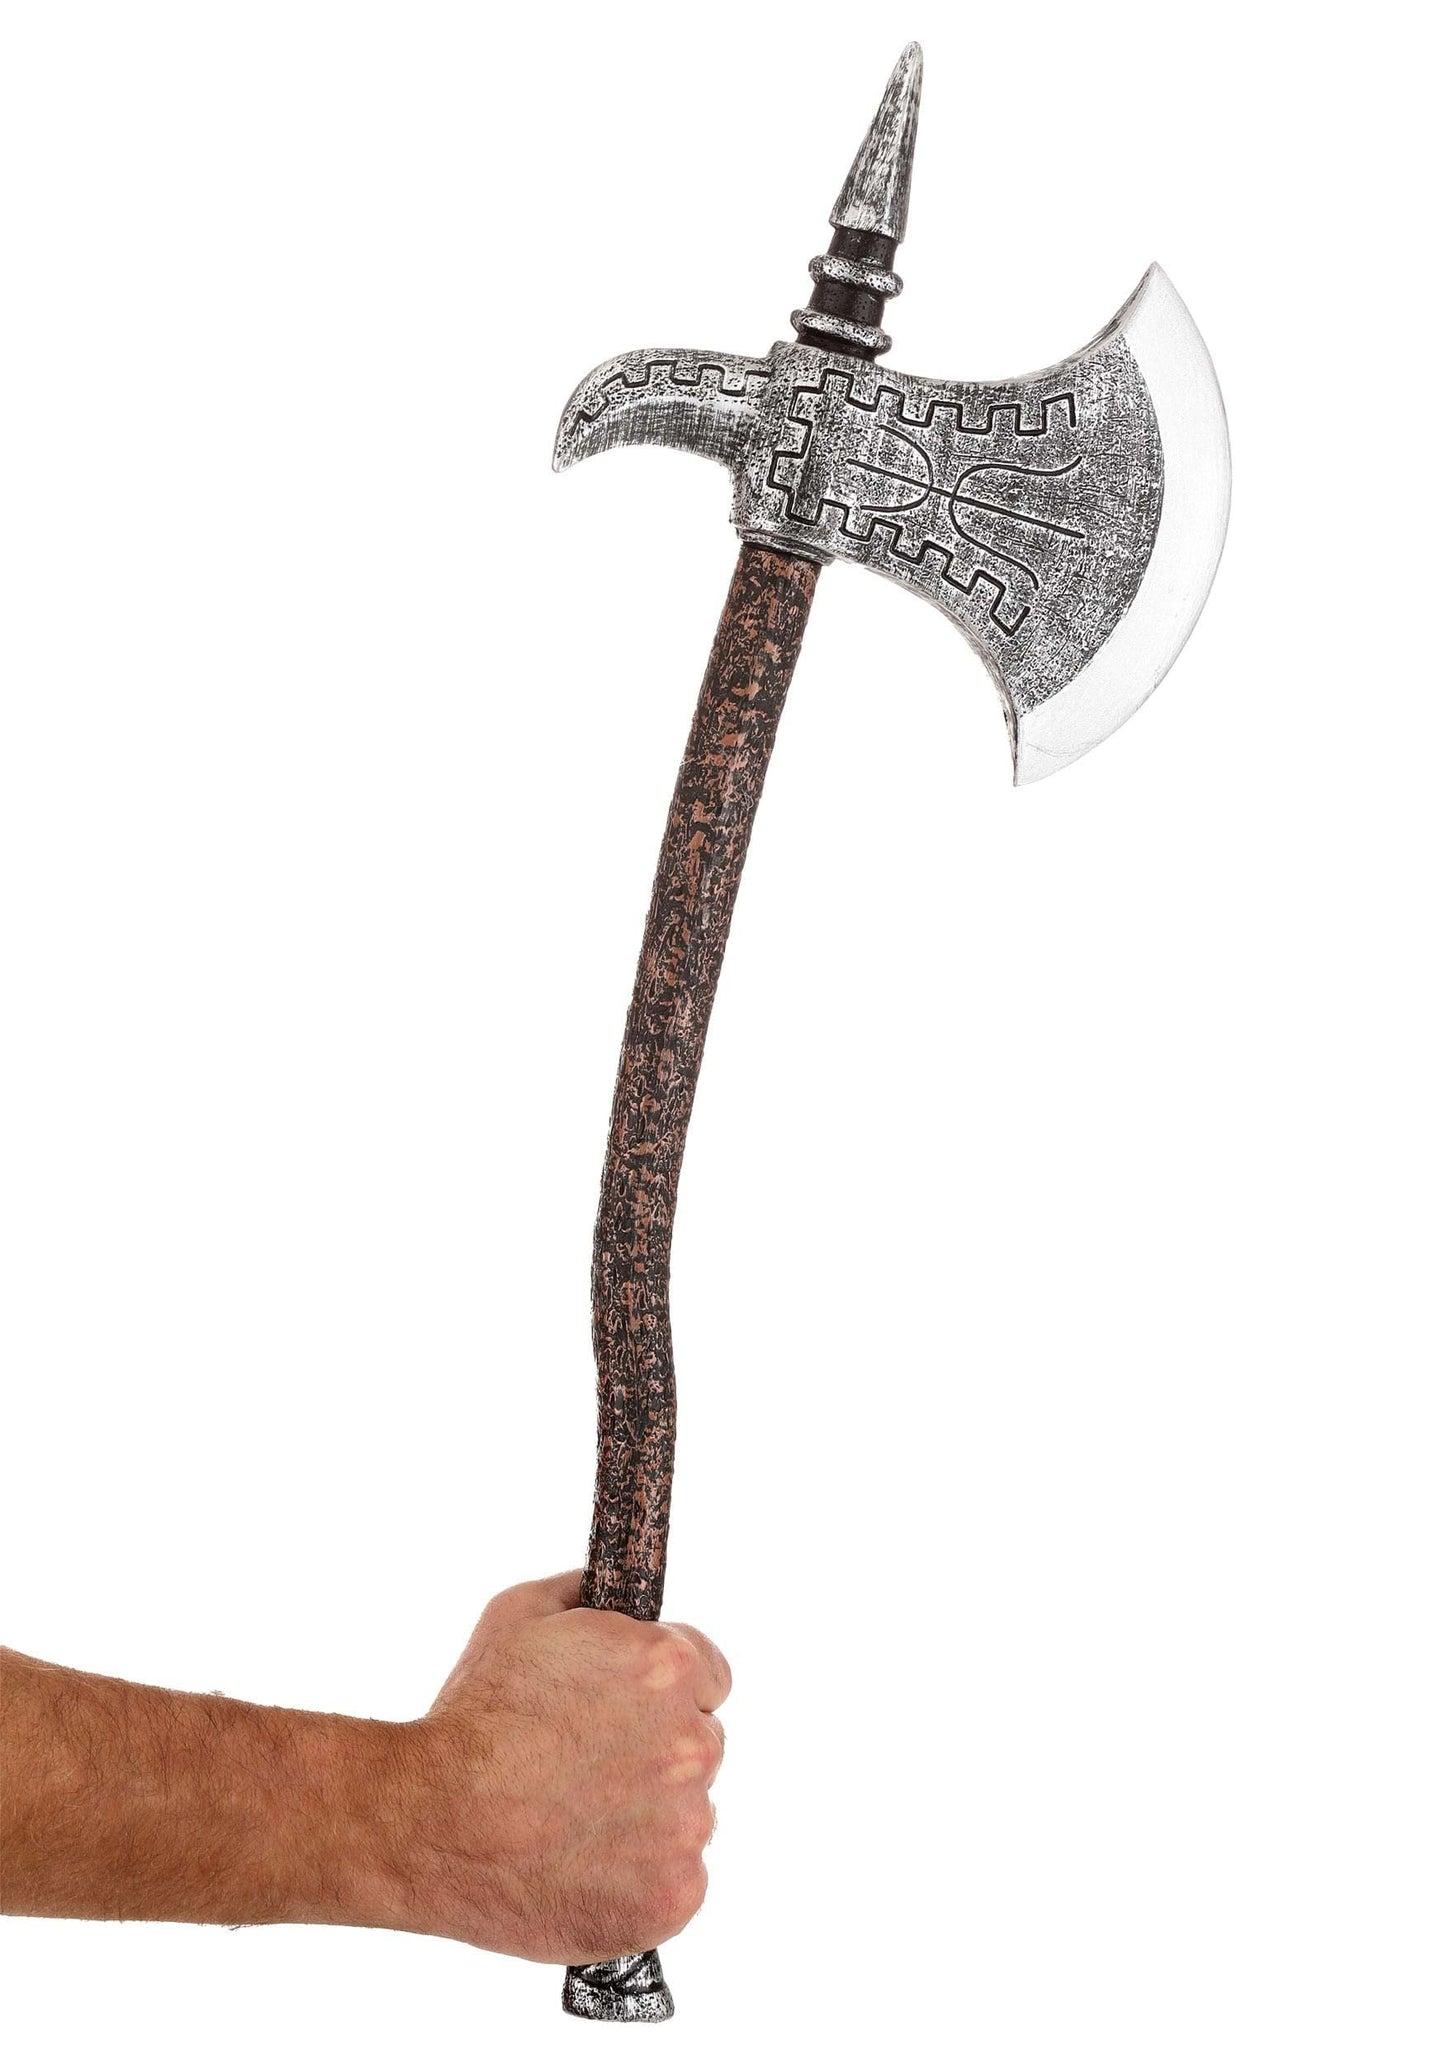 Deluxe Viking Spear Axe Prop Accessory Standard